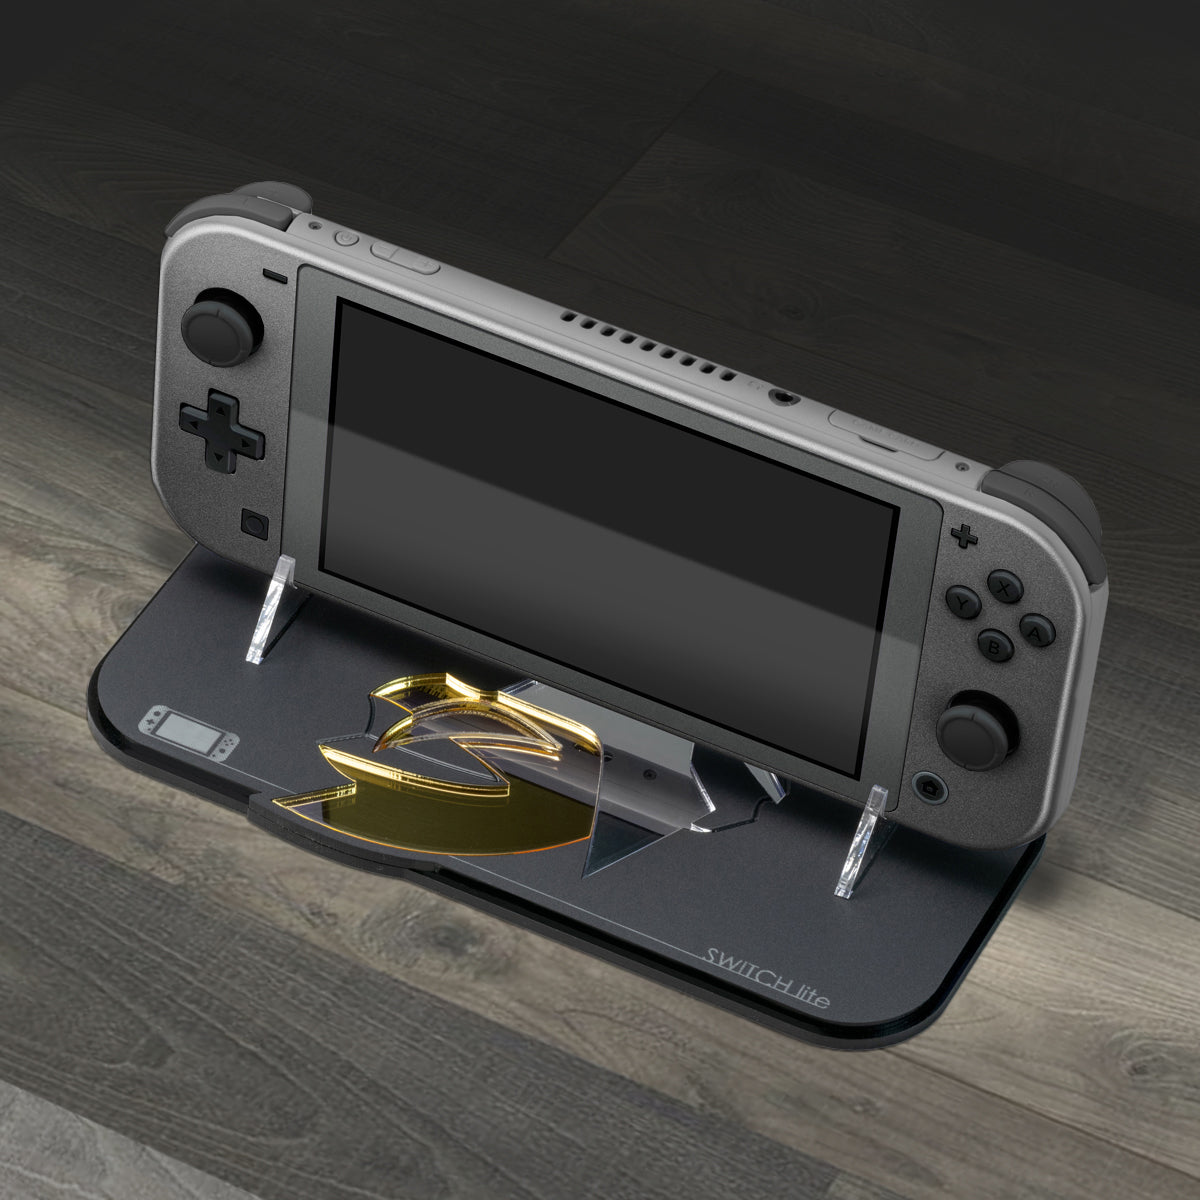 Nintendo Switch Lite Handheld Console Dialga and Palkia Edition